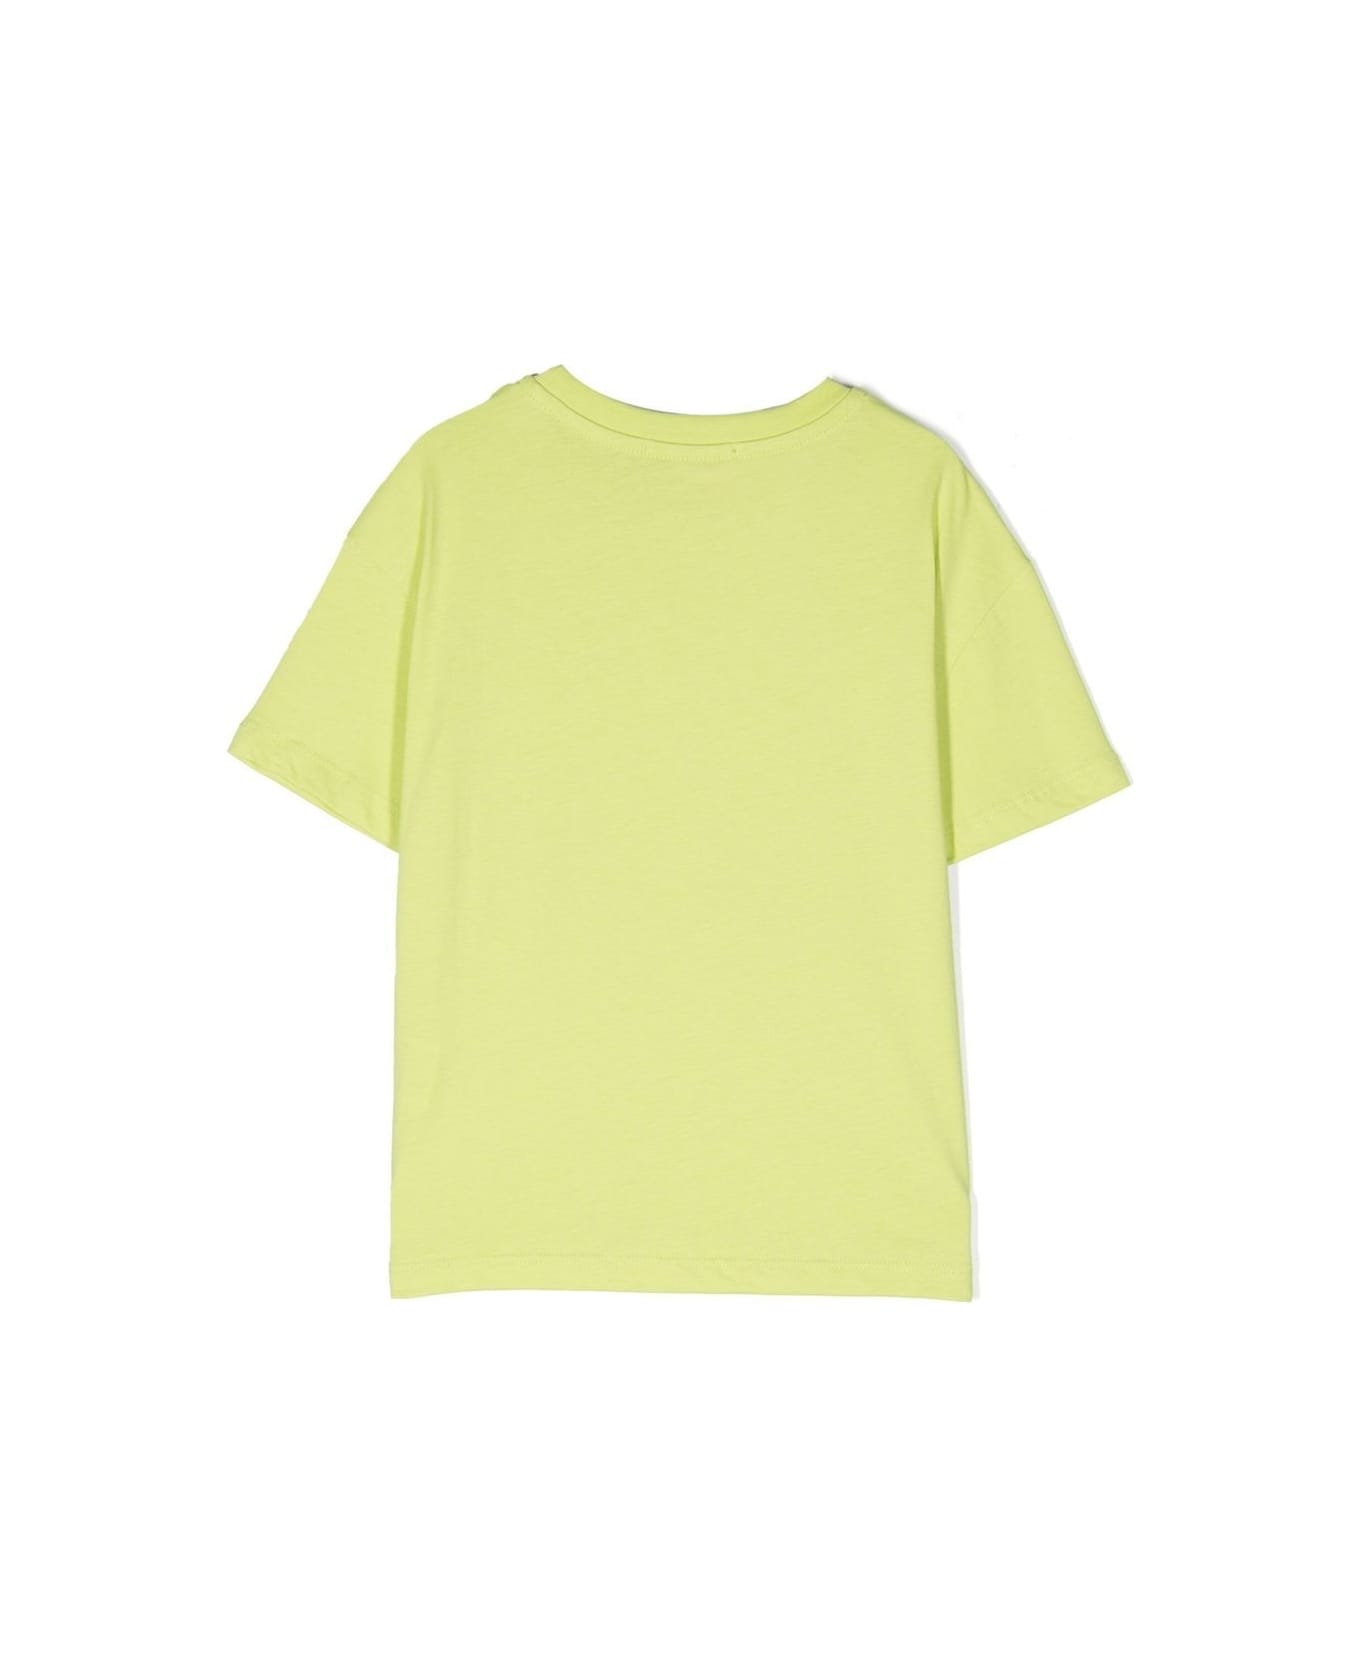 MSGM T-shirt Gialla Con Logo Bianco - Yellow